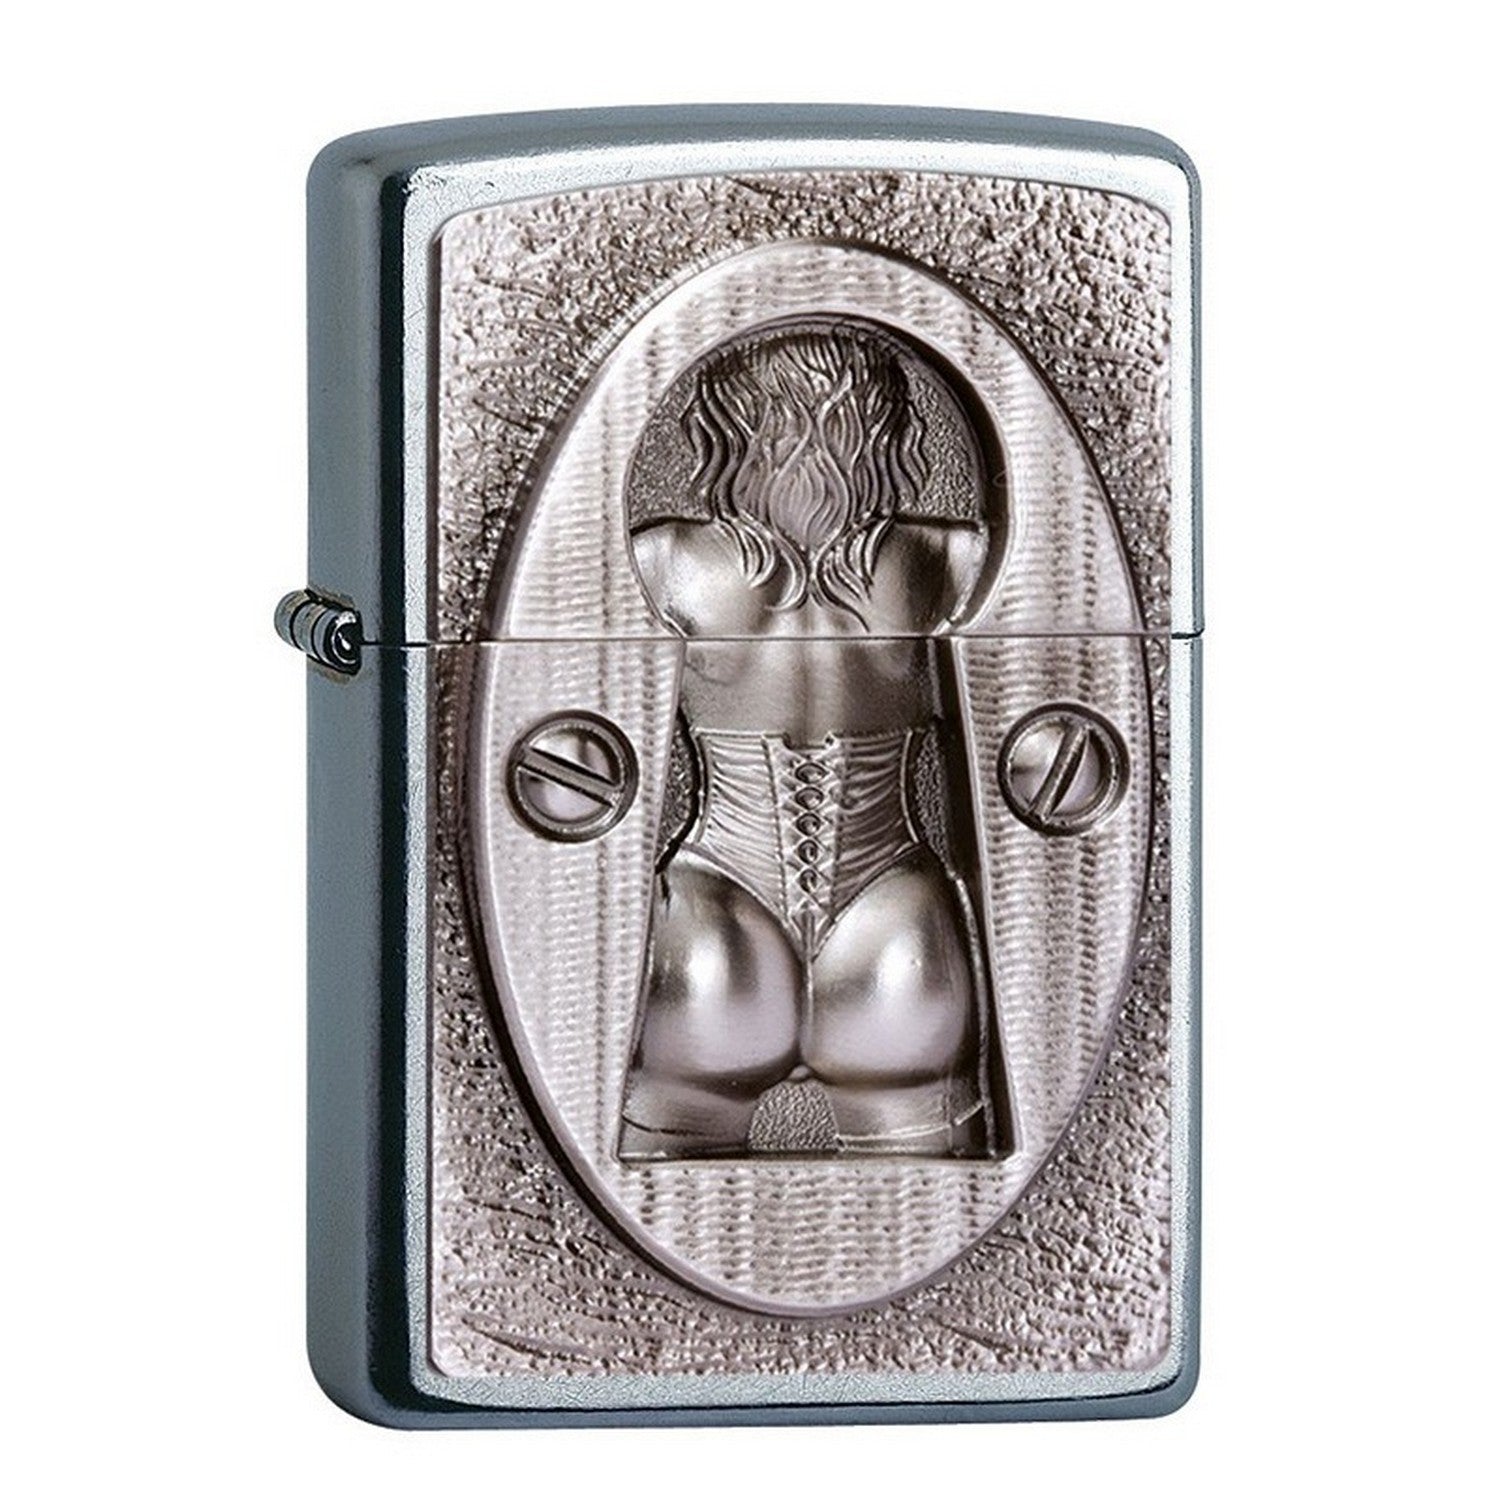 Zippo Keyhole Emblem Woman Design Lighter